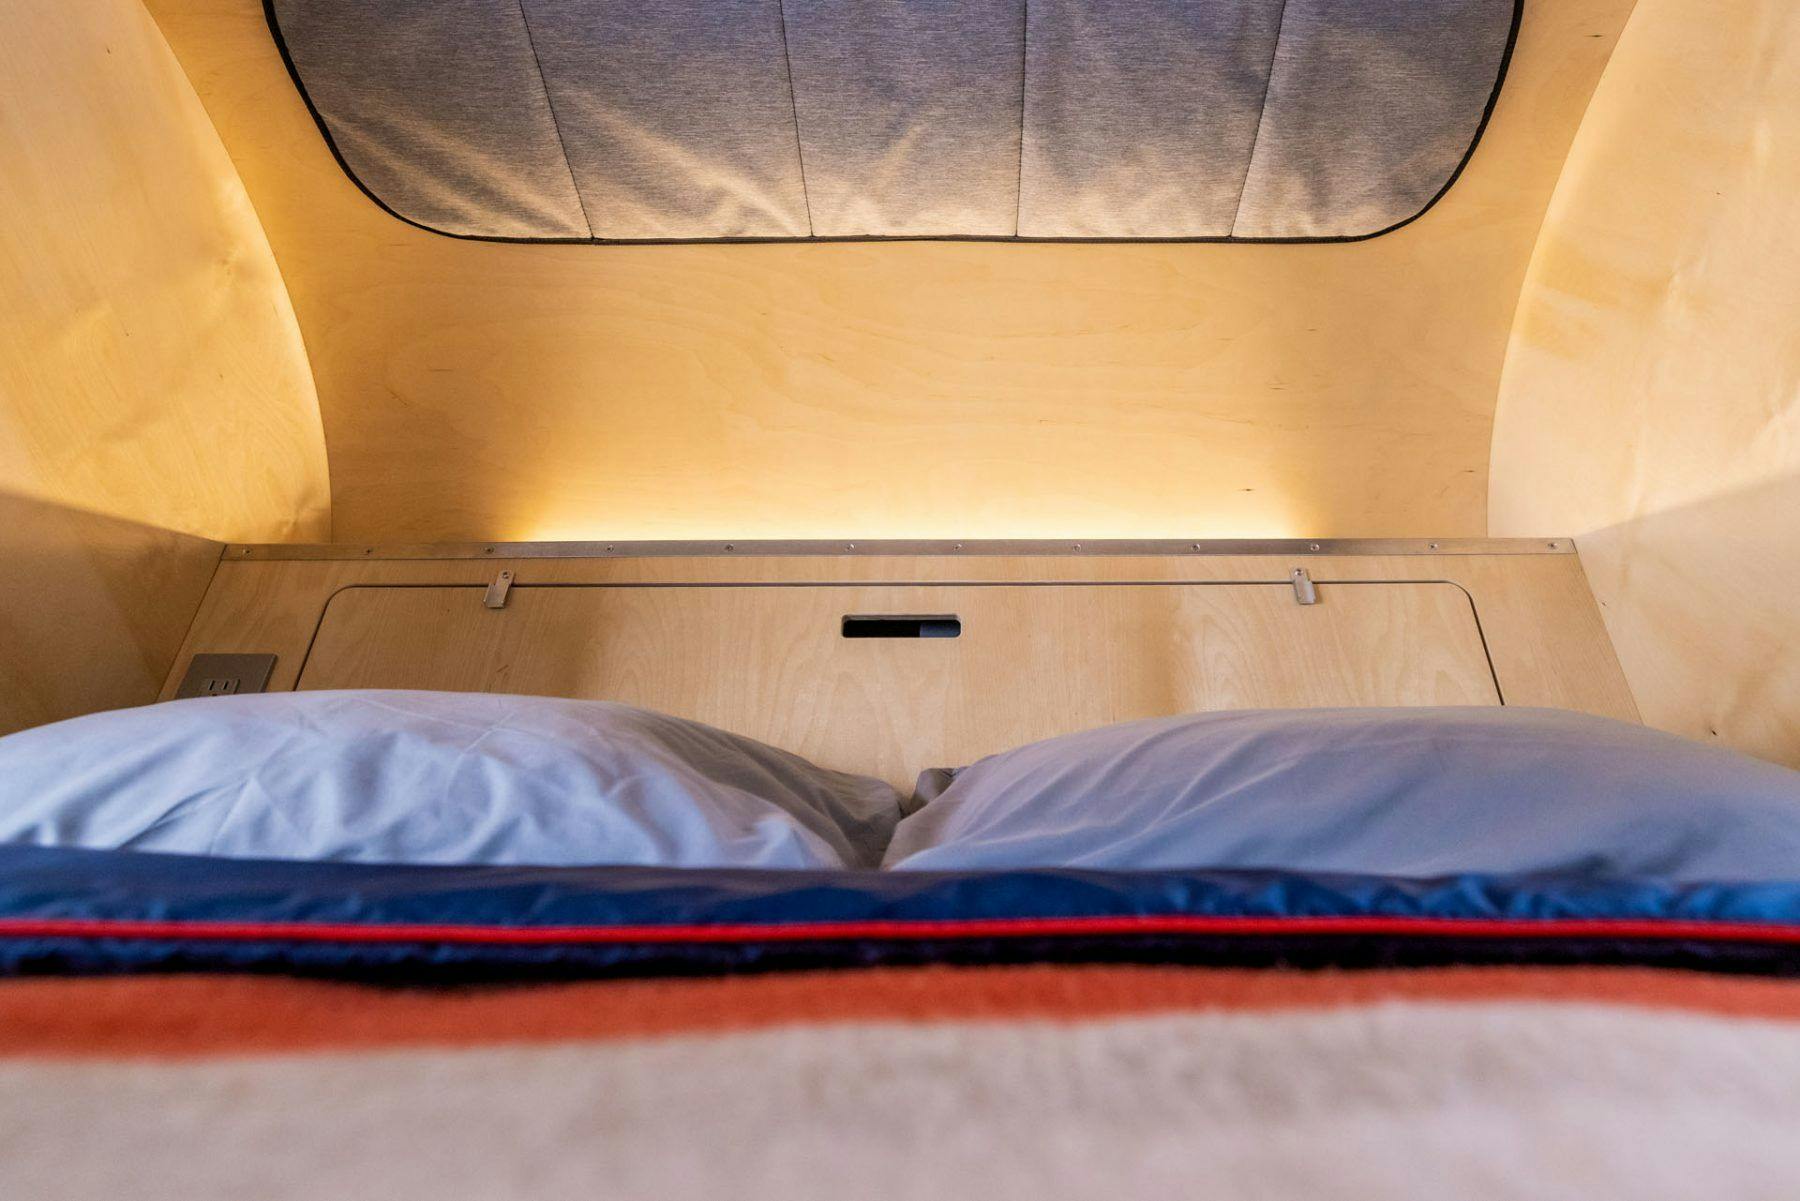 Birch interior of a teardrop trailer, showing a full queen size mattress, angled headboard, and stargazer window.